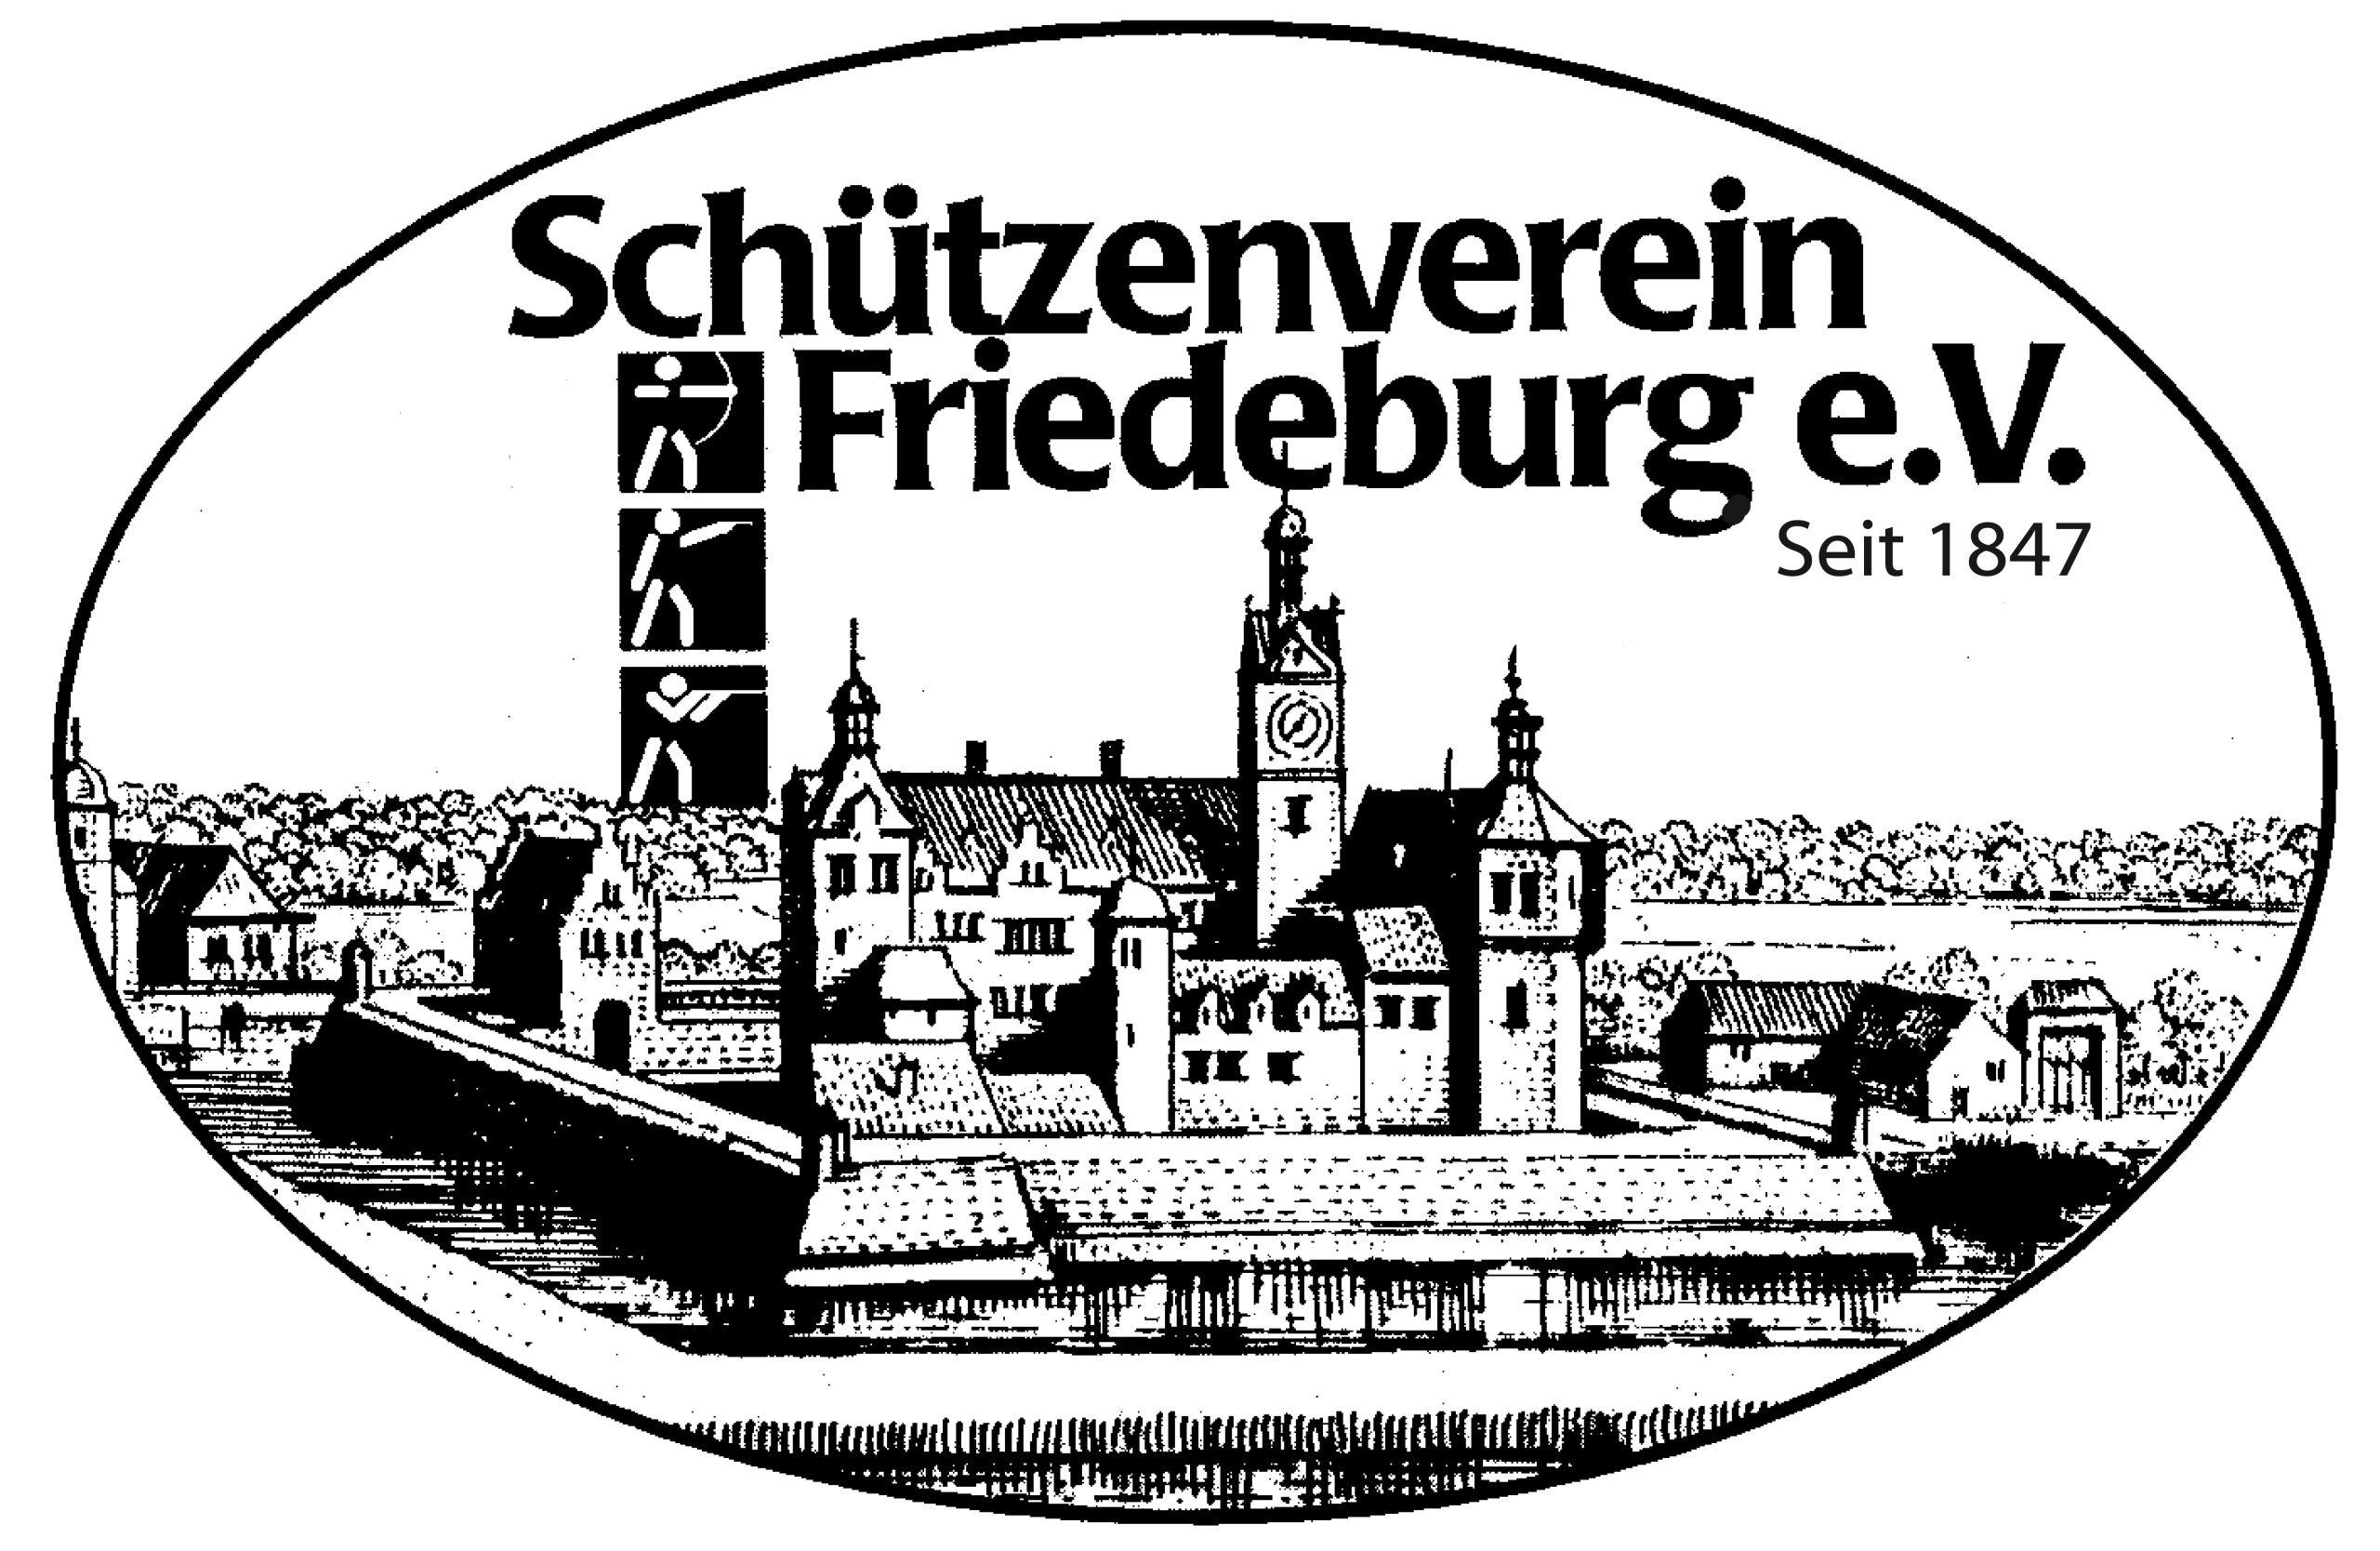 Schützenverein Friedeburg e.V.